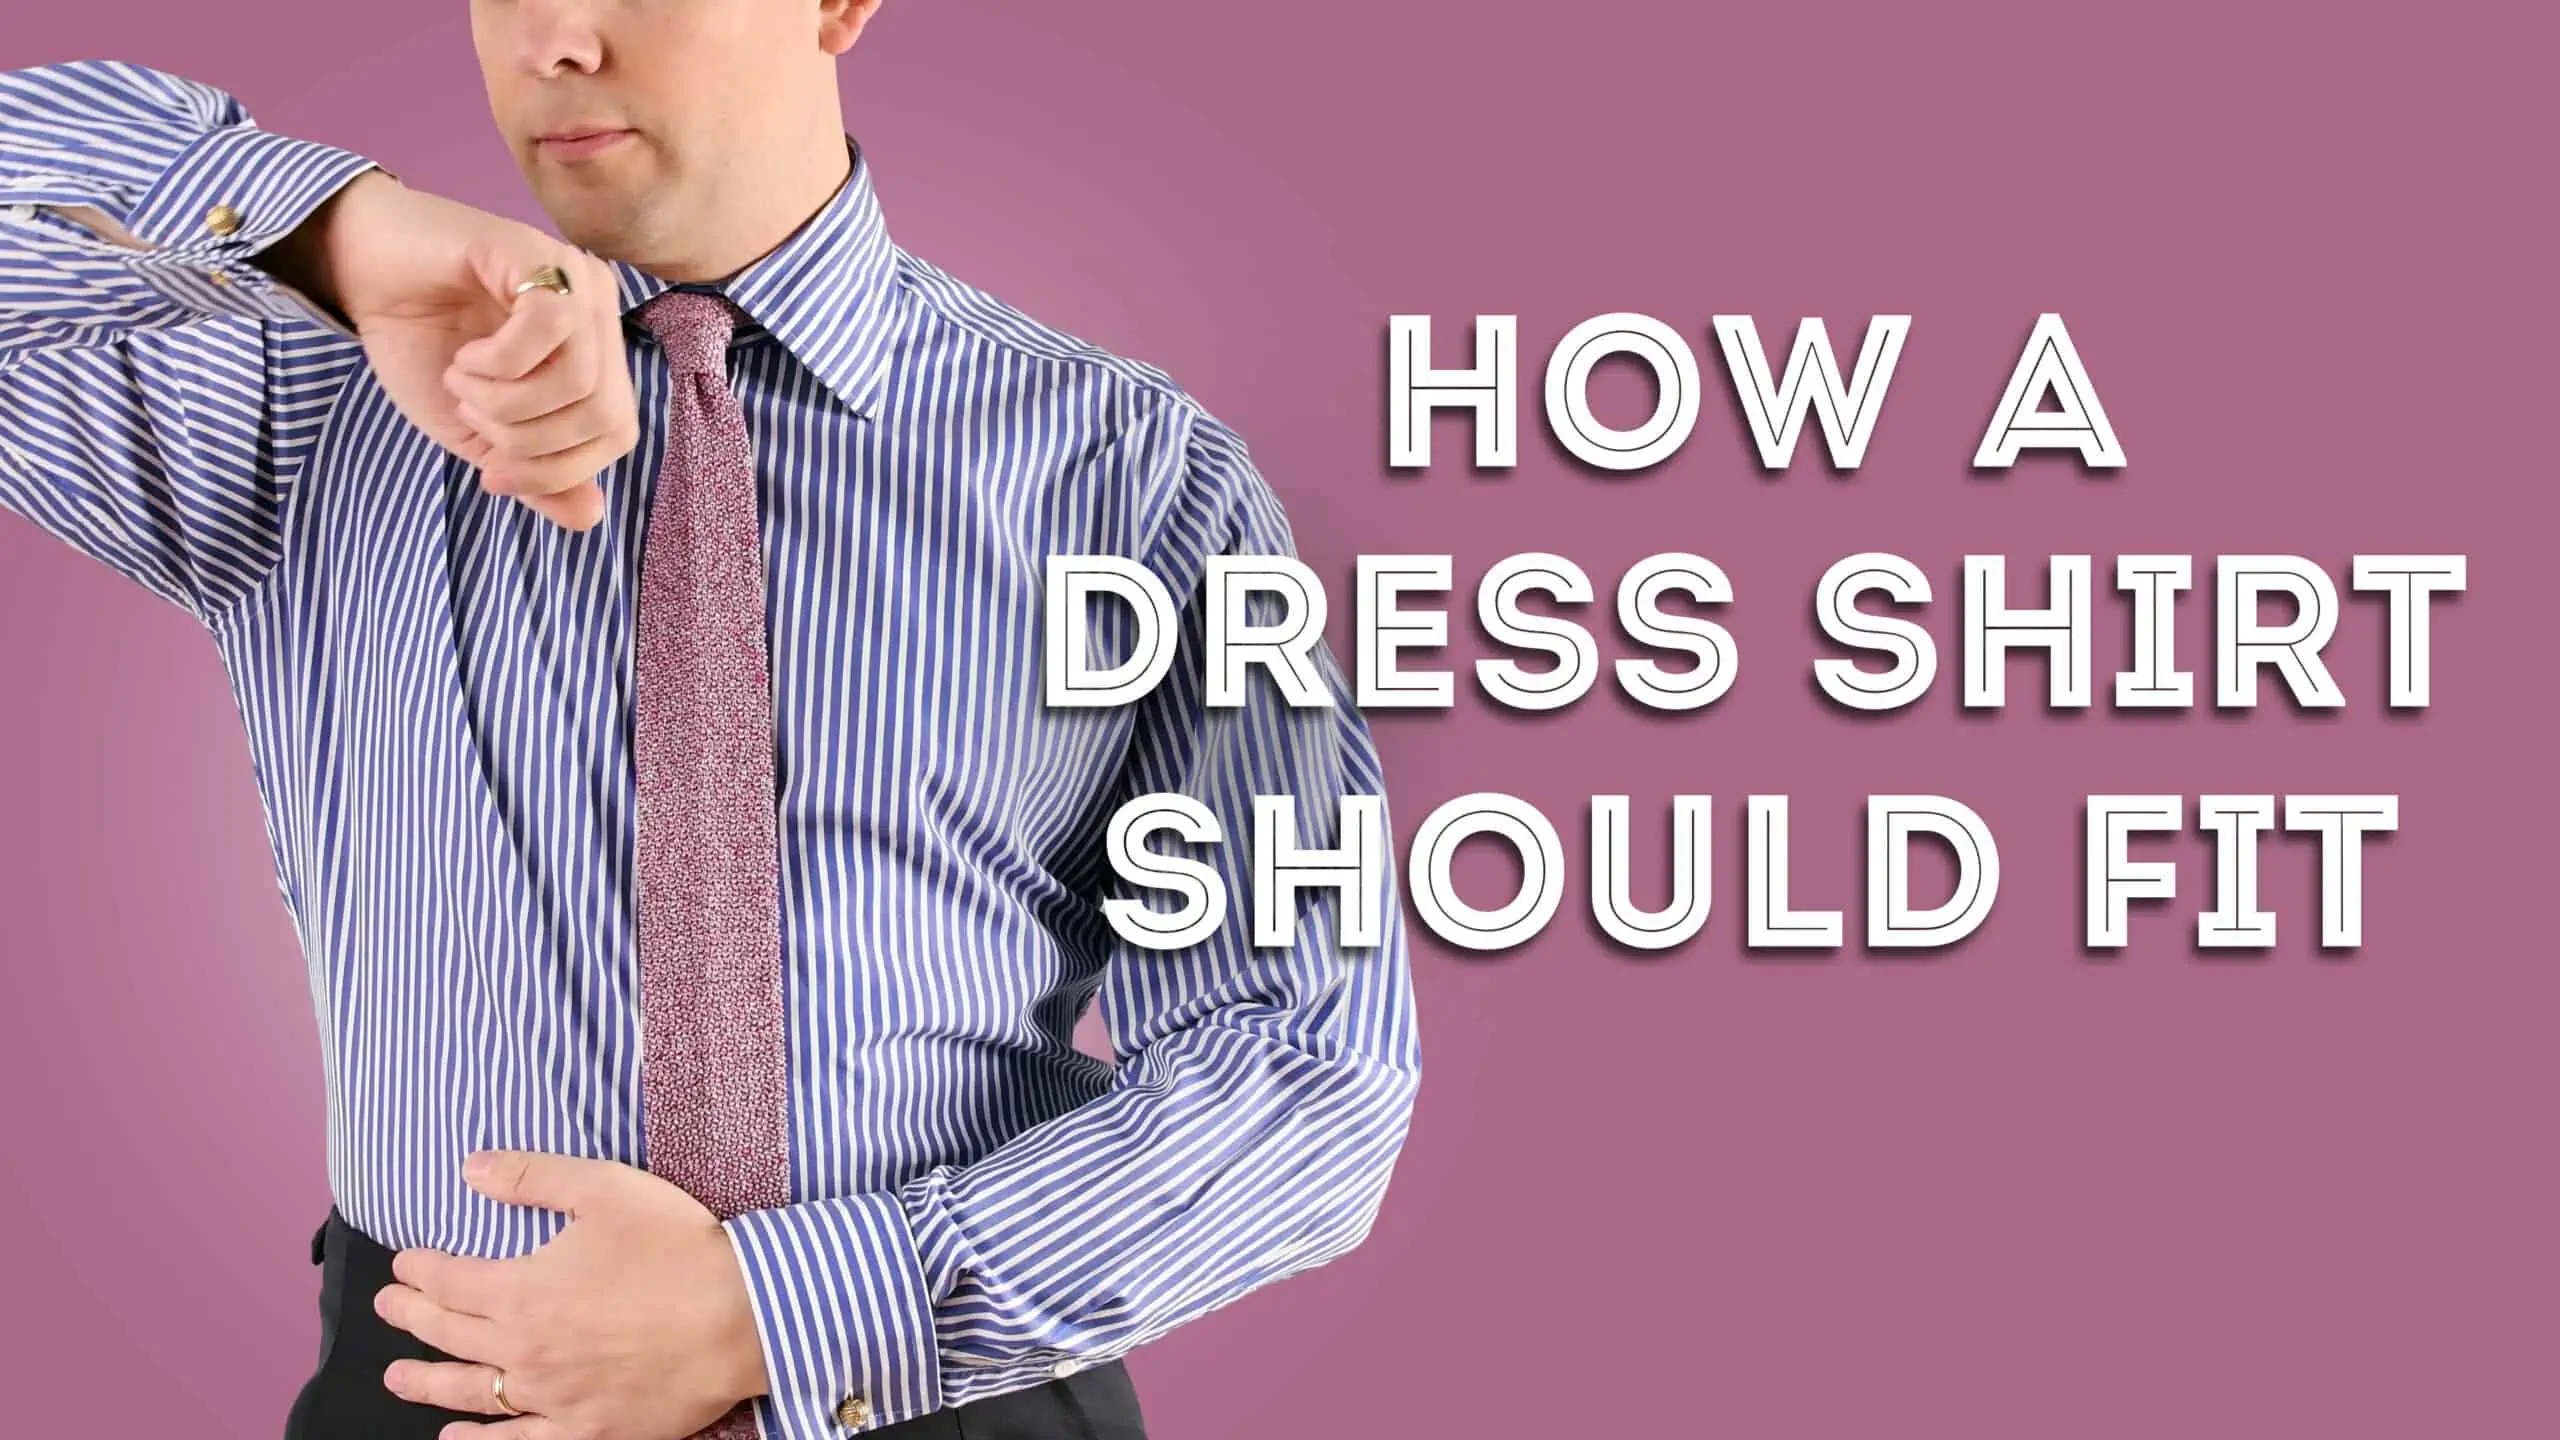 How A Dress Shirt Should Fit - Proper Styling Details For Men'S Shirts